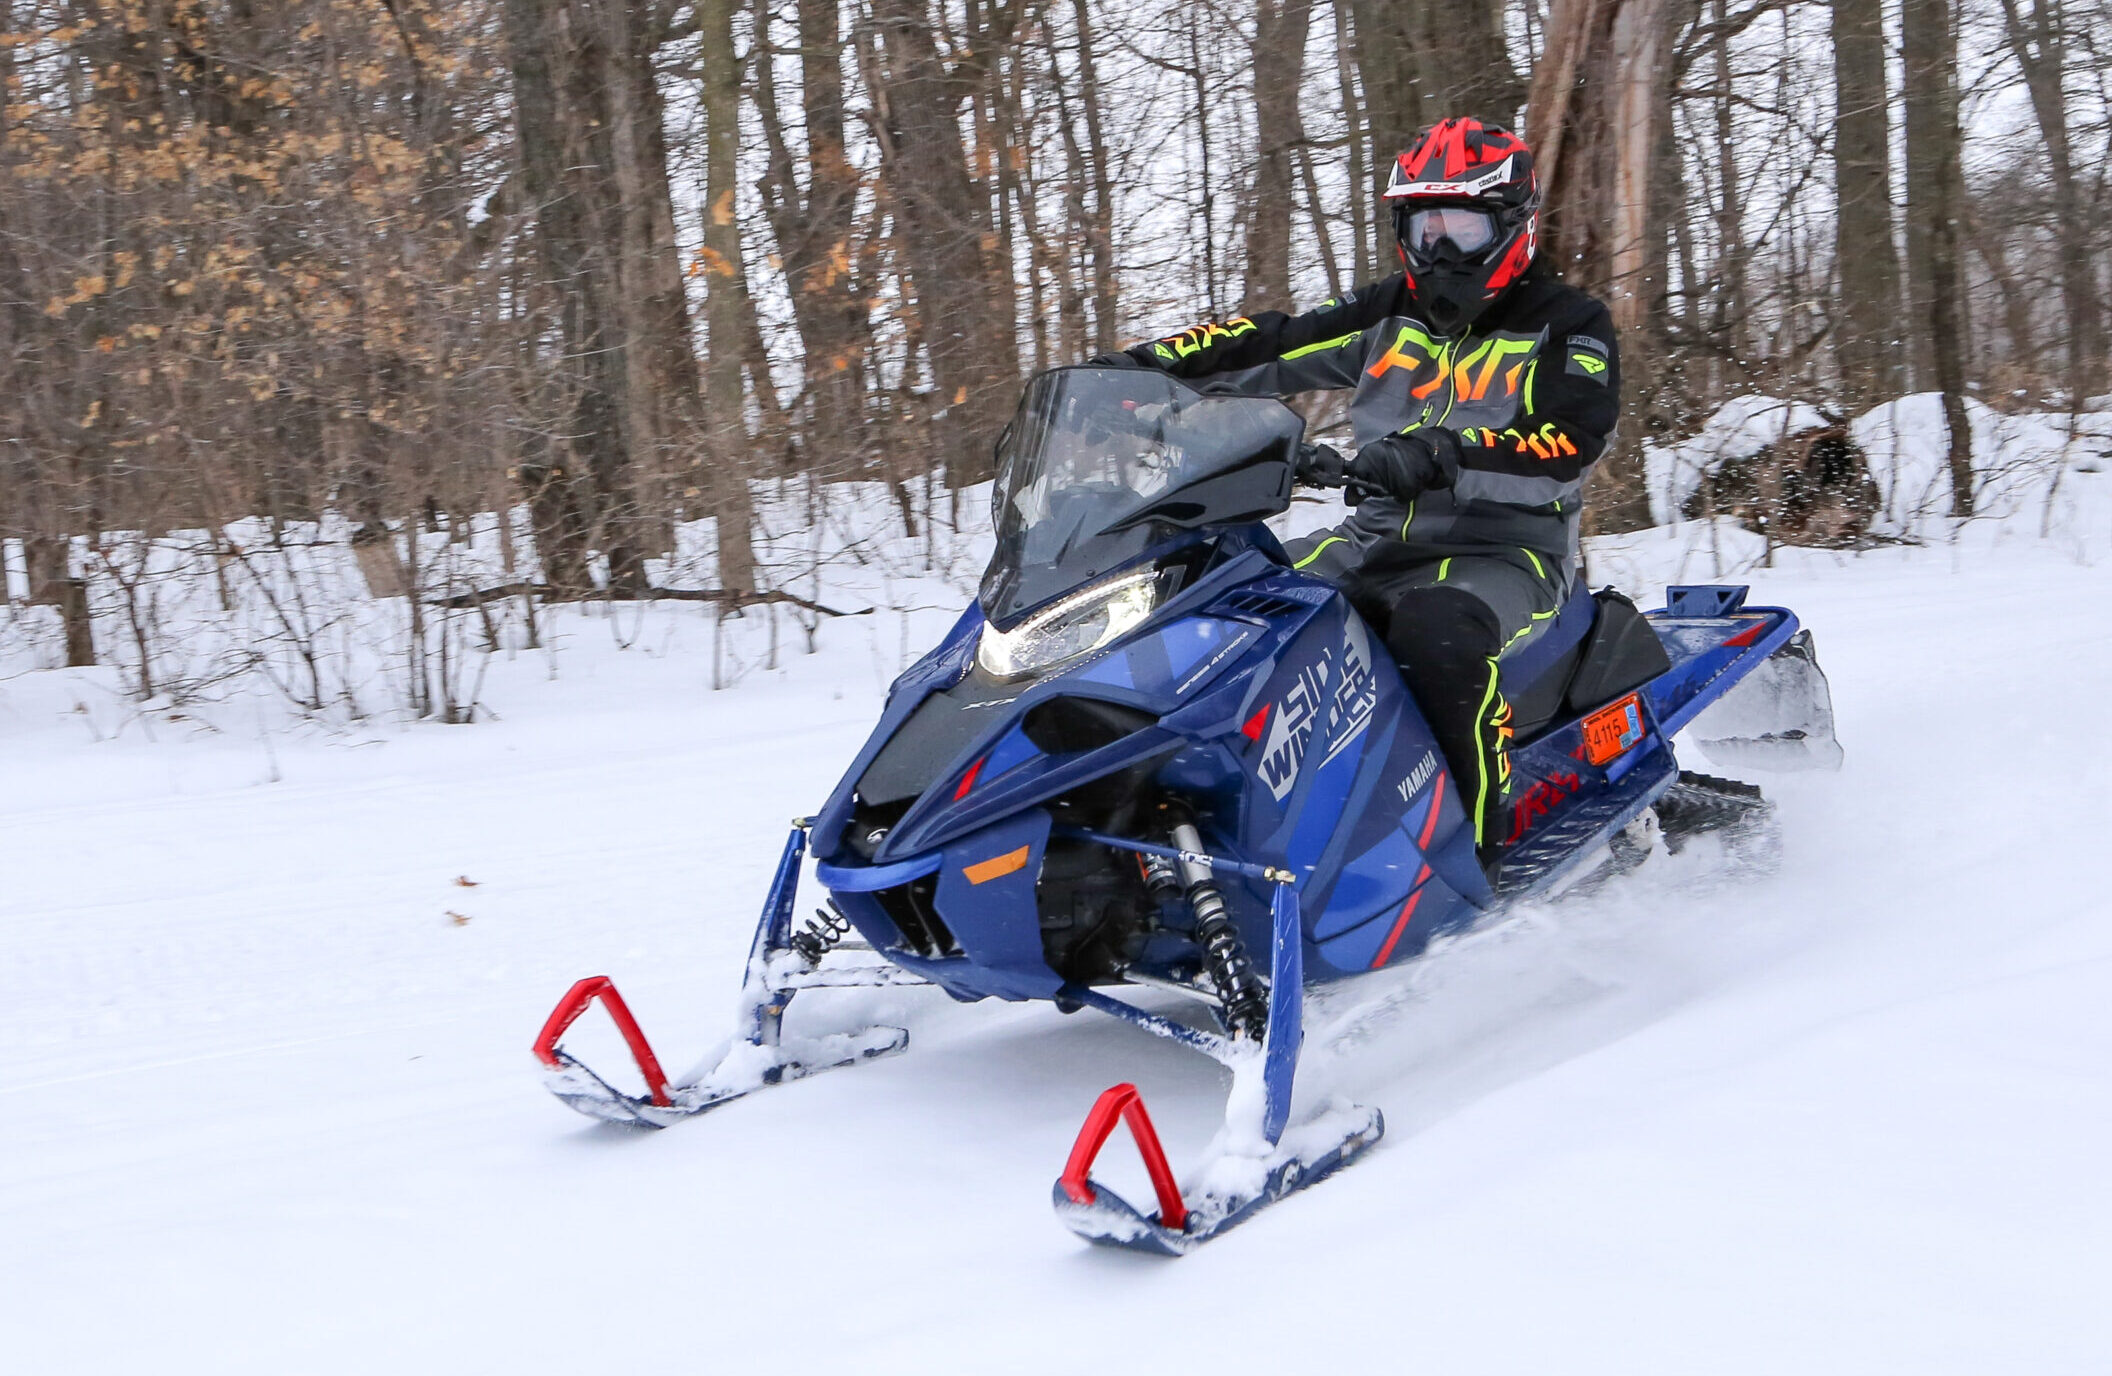 Yamaha Sidewinder snowmobile on a Minnesota trail ride